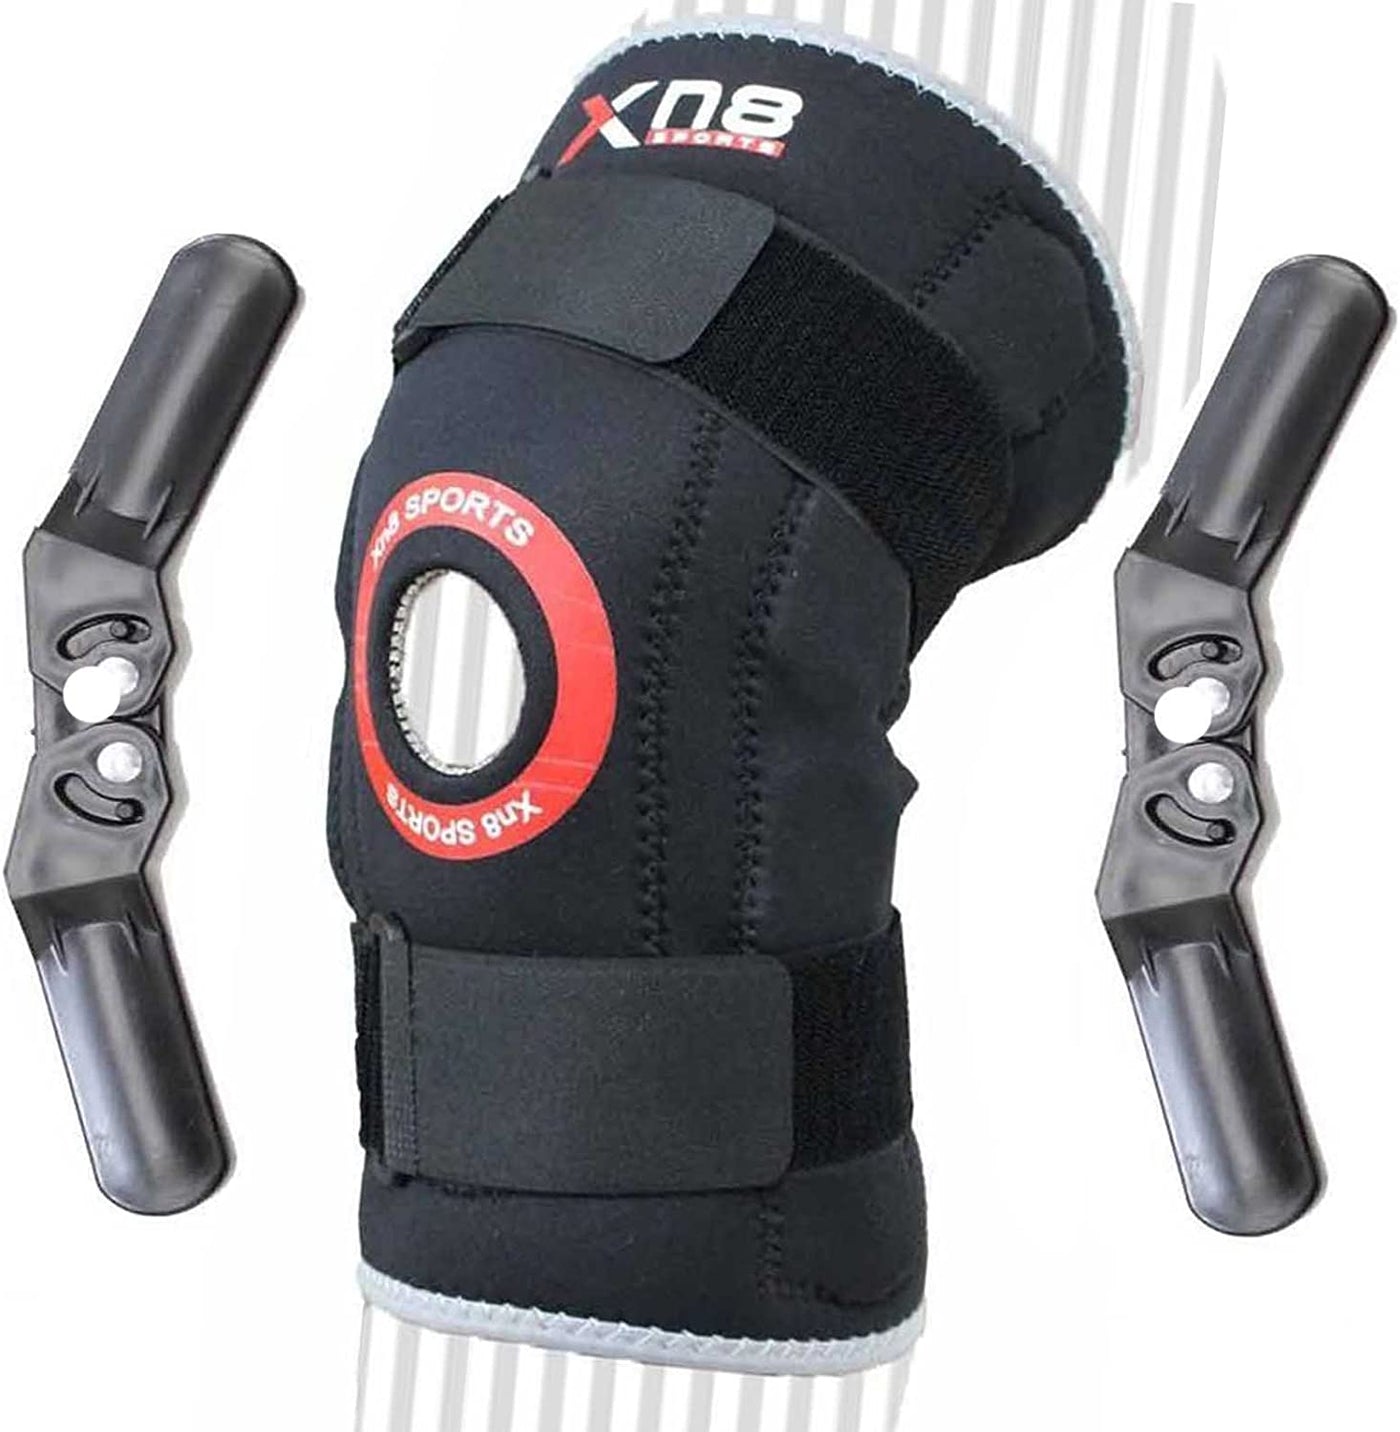 Xn8 Sports Knee Brace Grey Color